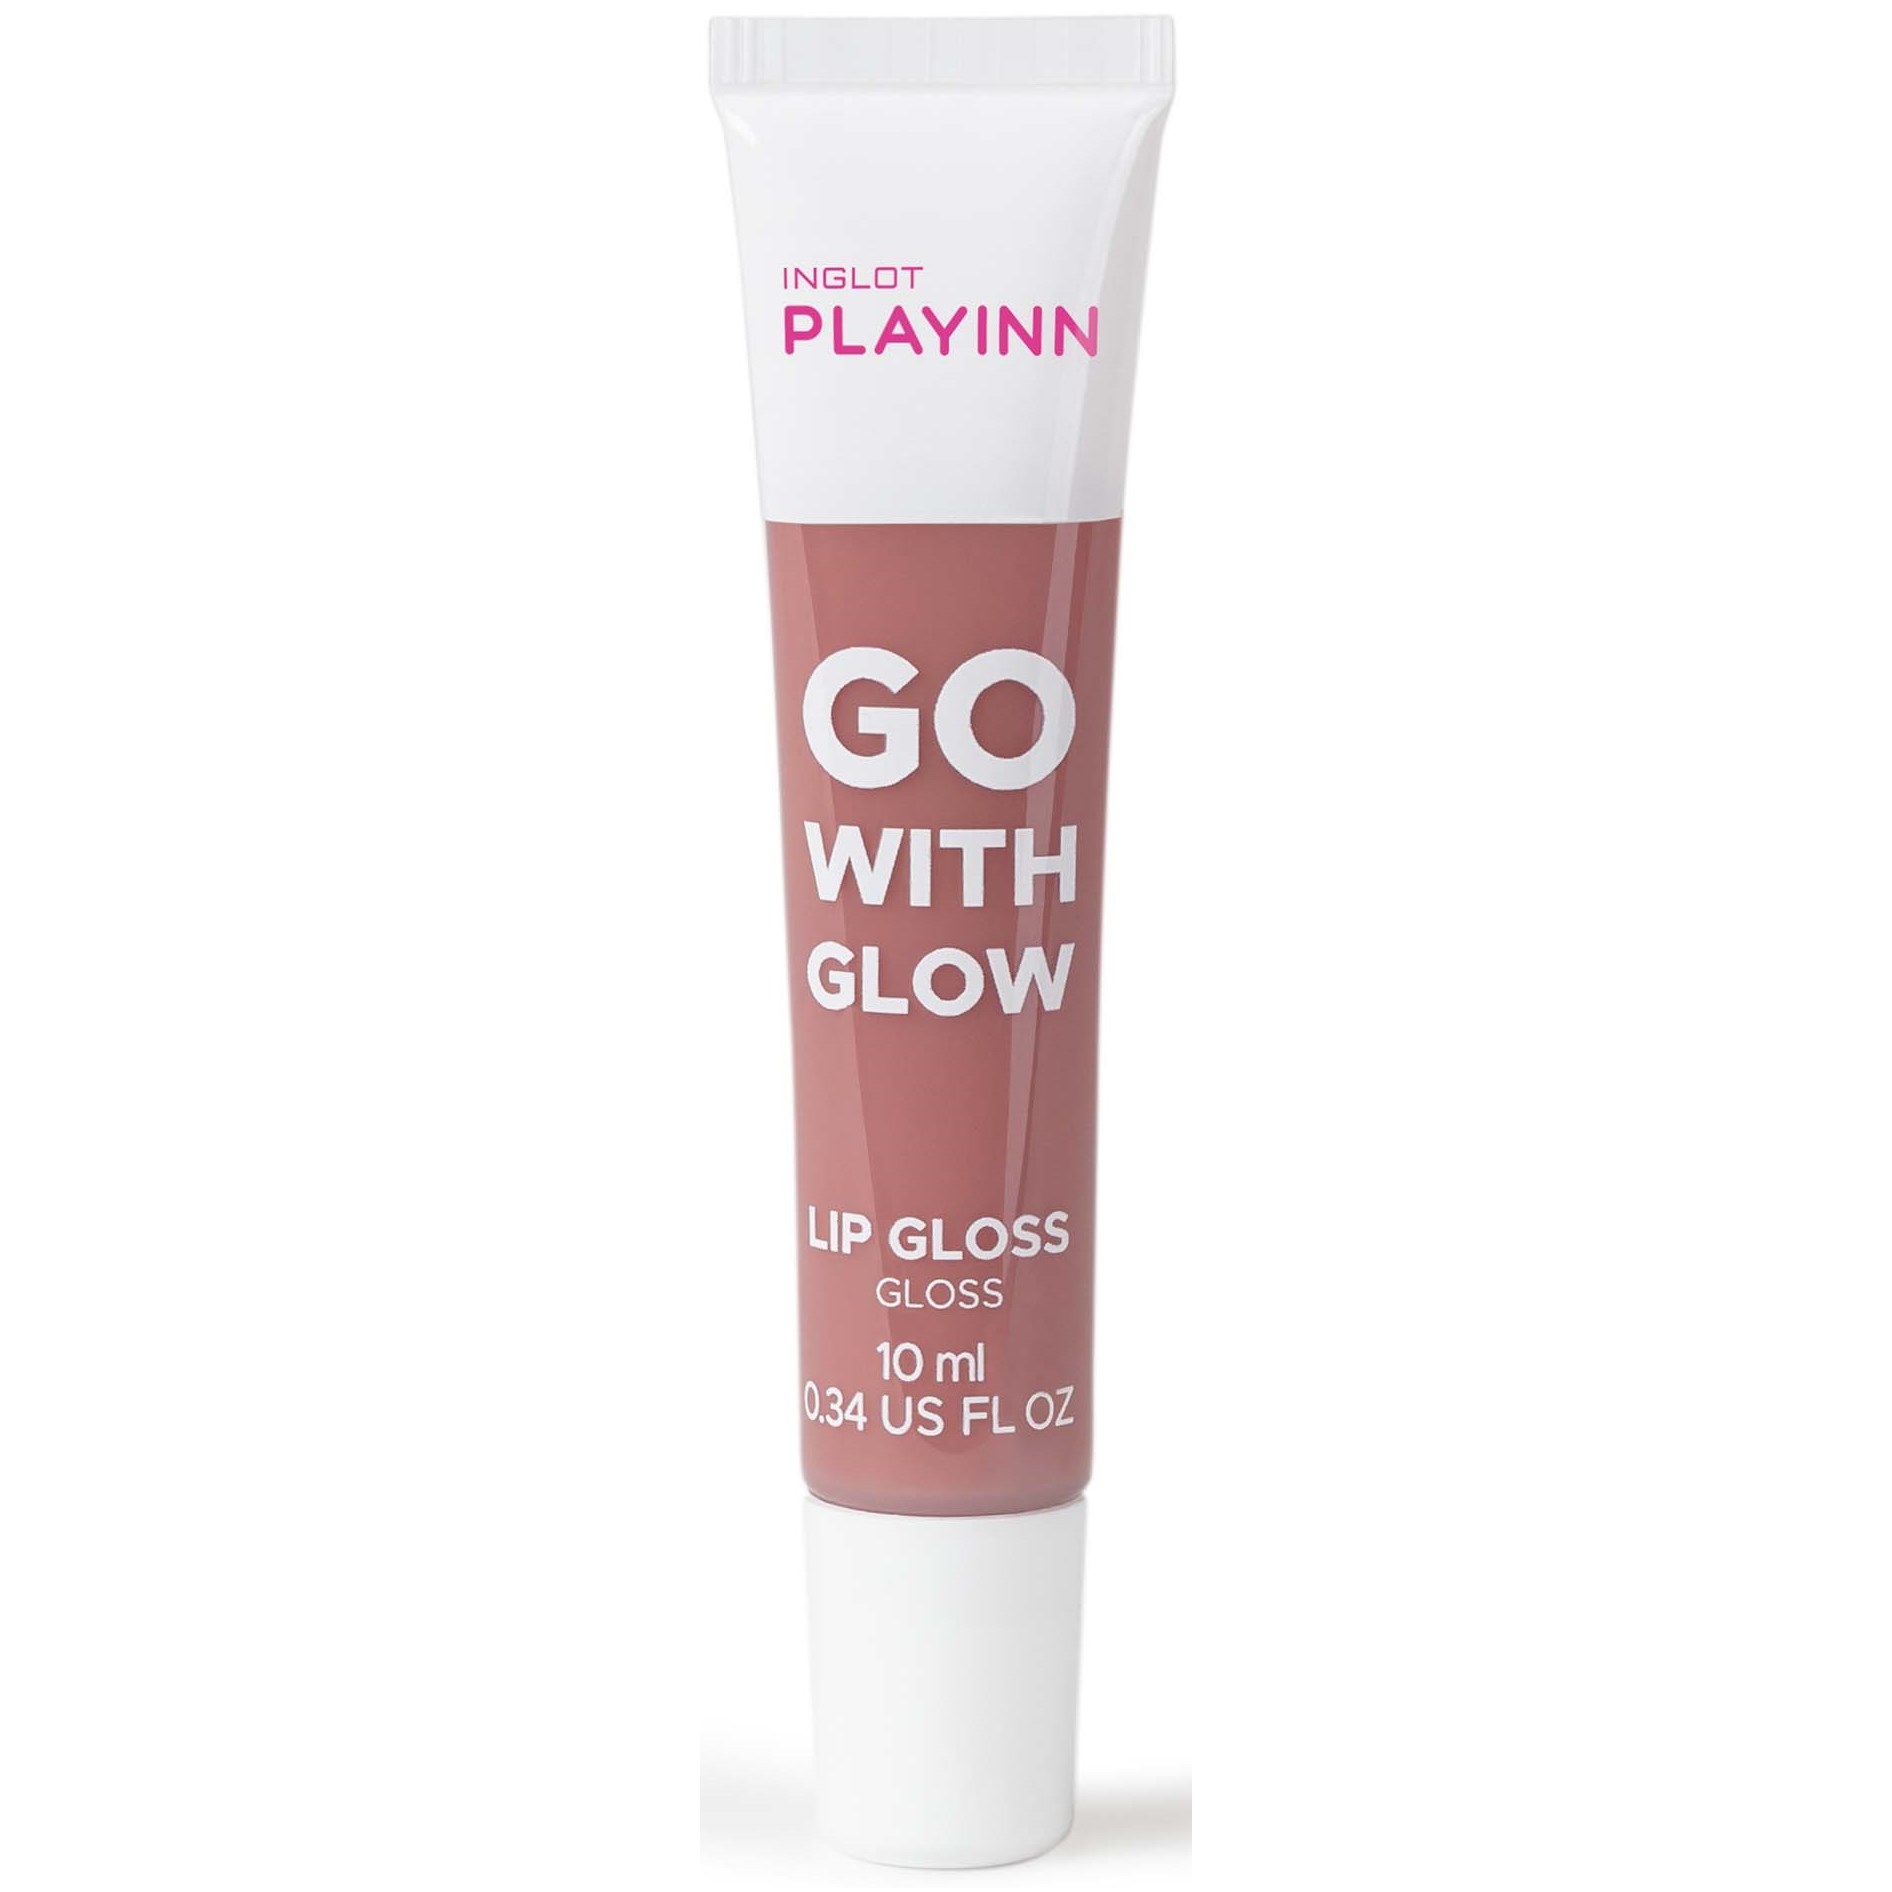 Läs mer om Inglot Playinn Go With Glow Lip Gloss